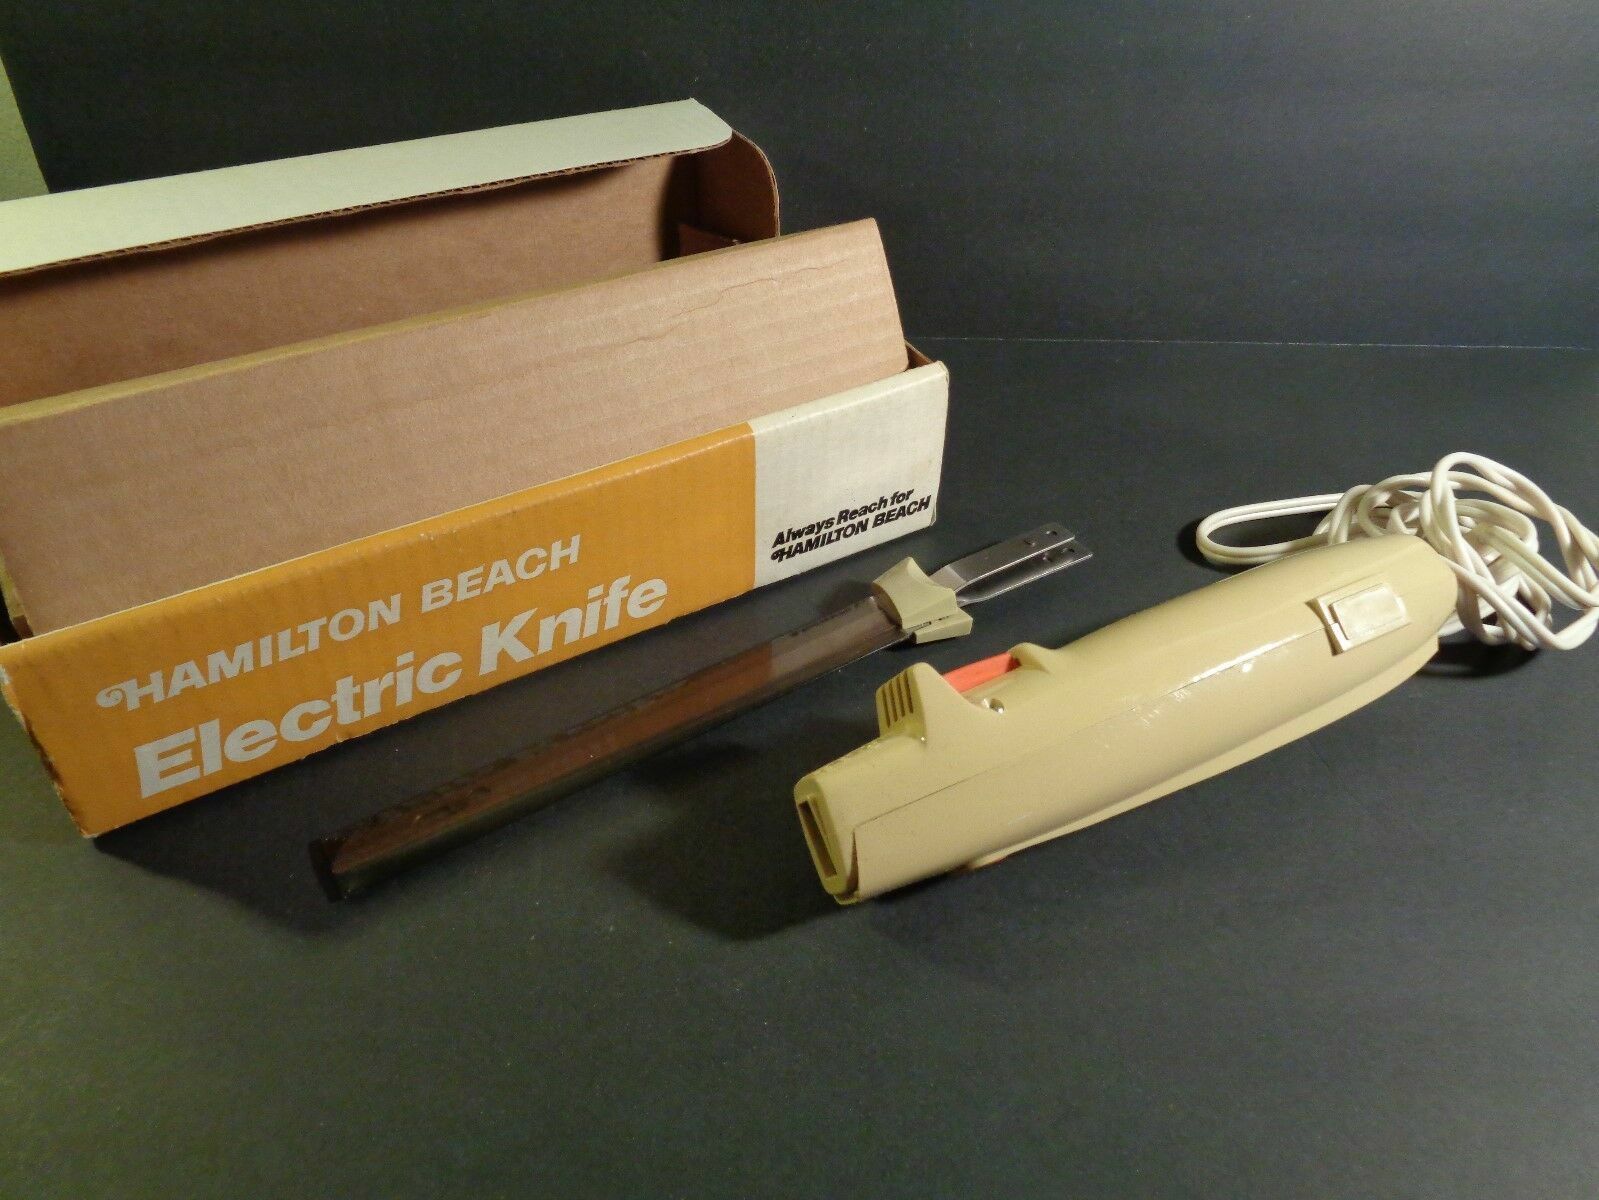 Vintage Hamilton Beach Scovill Electric Knife Model 291G Gold Color Orig Box F1